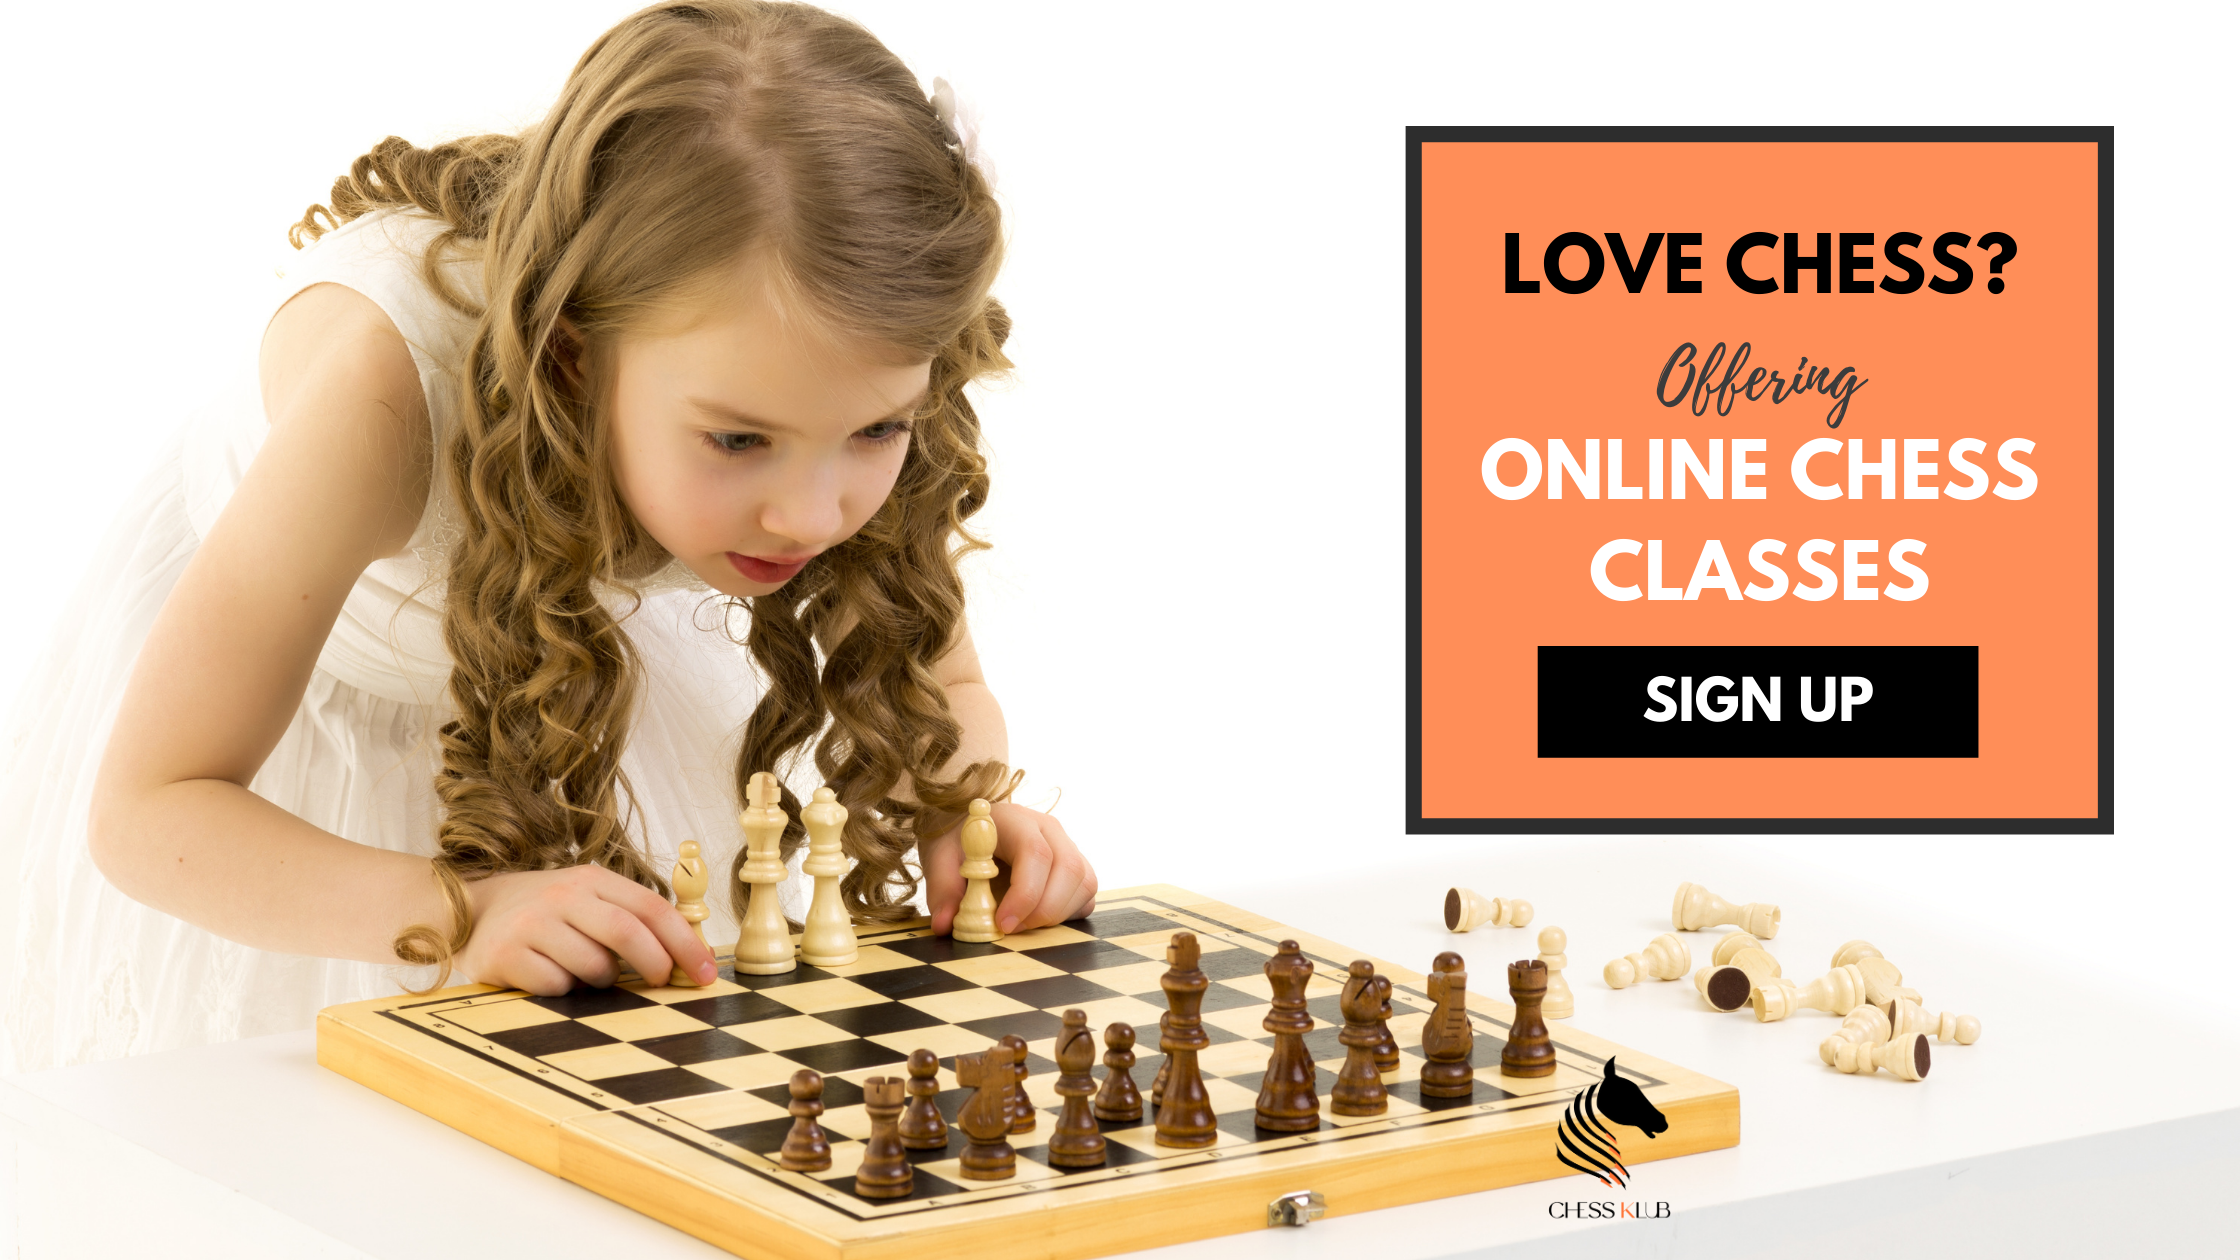 Online Chess Academy